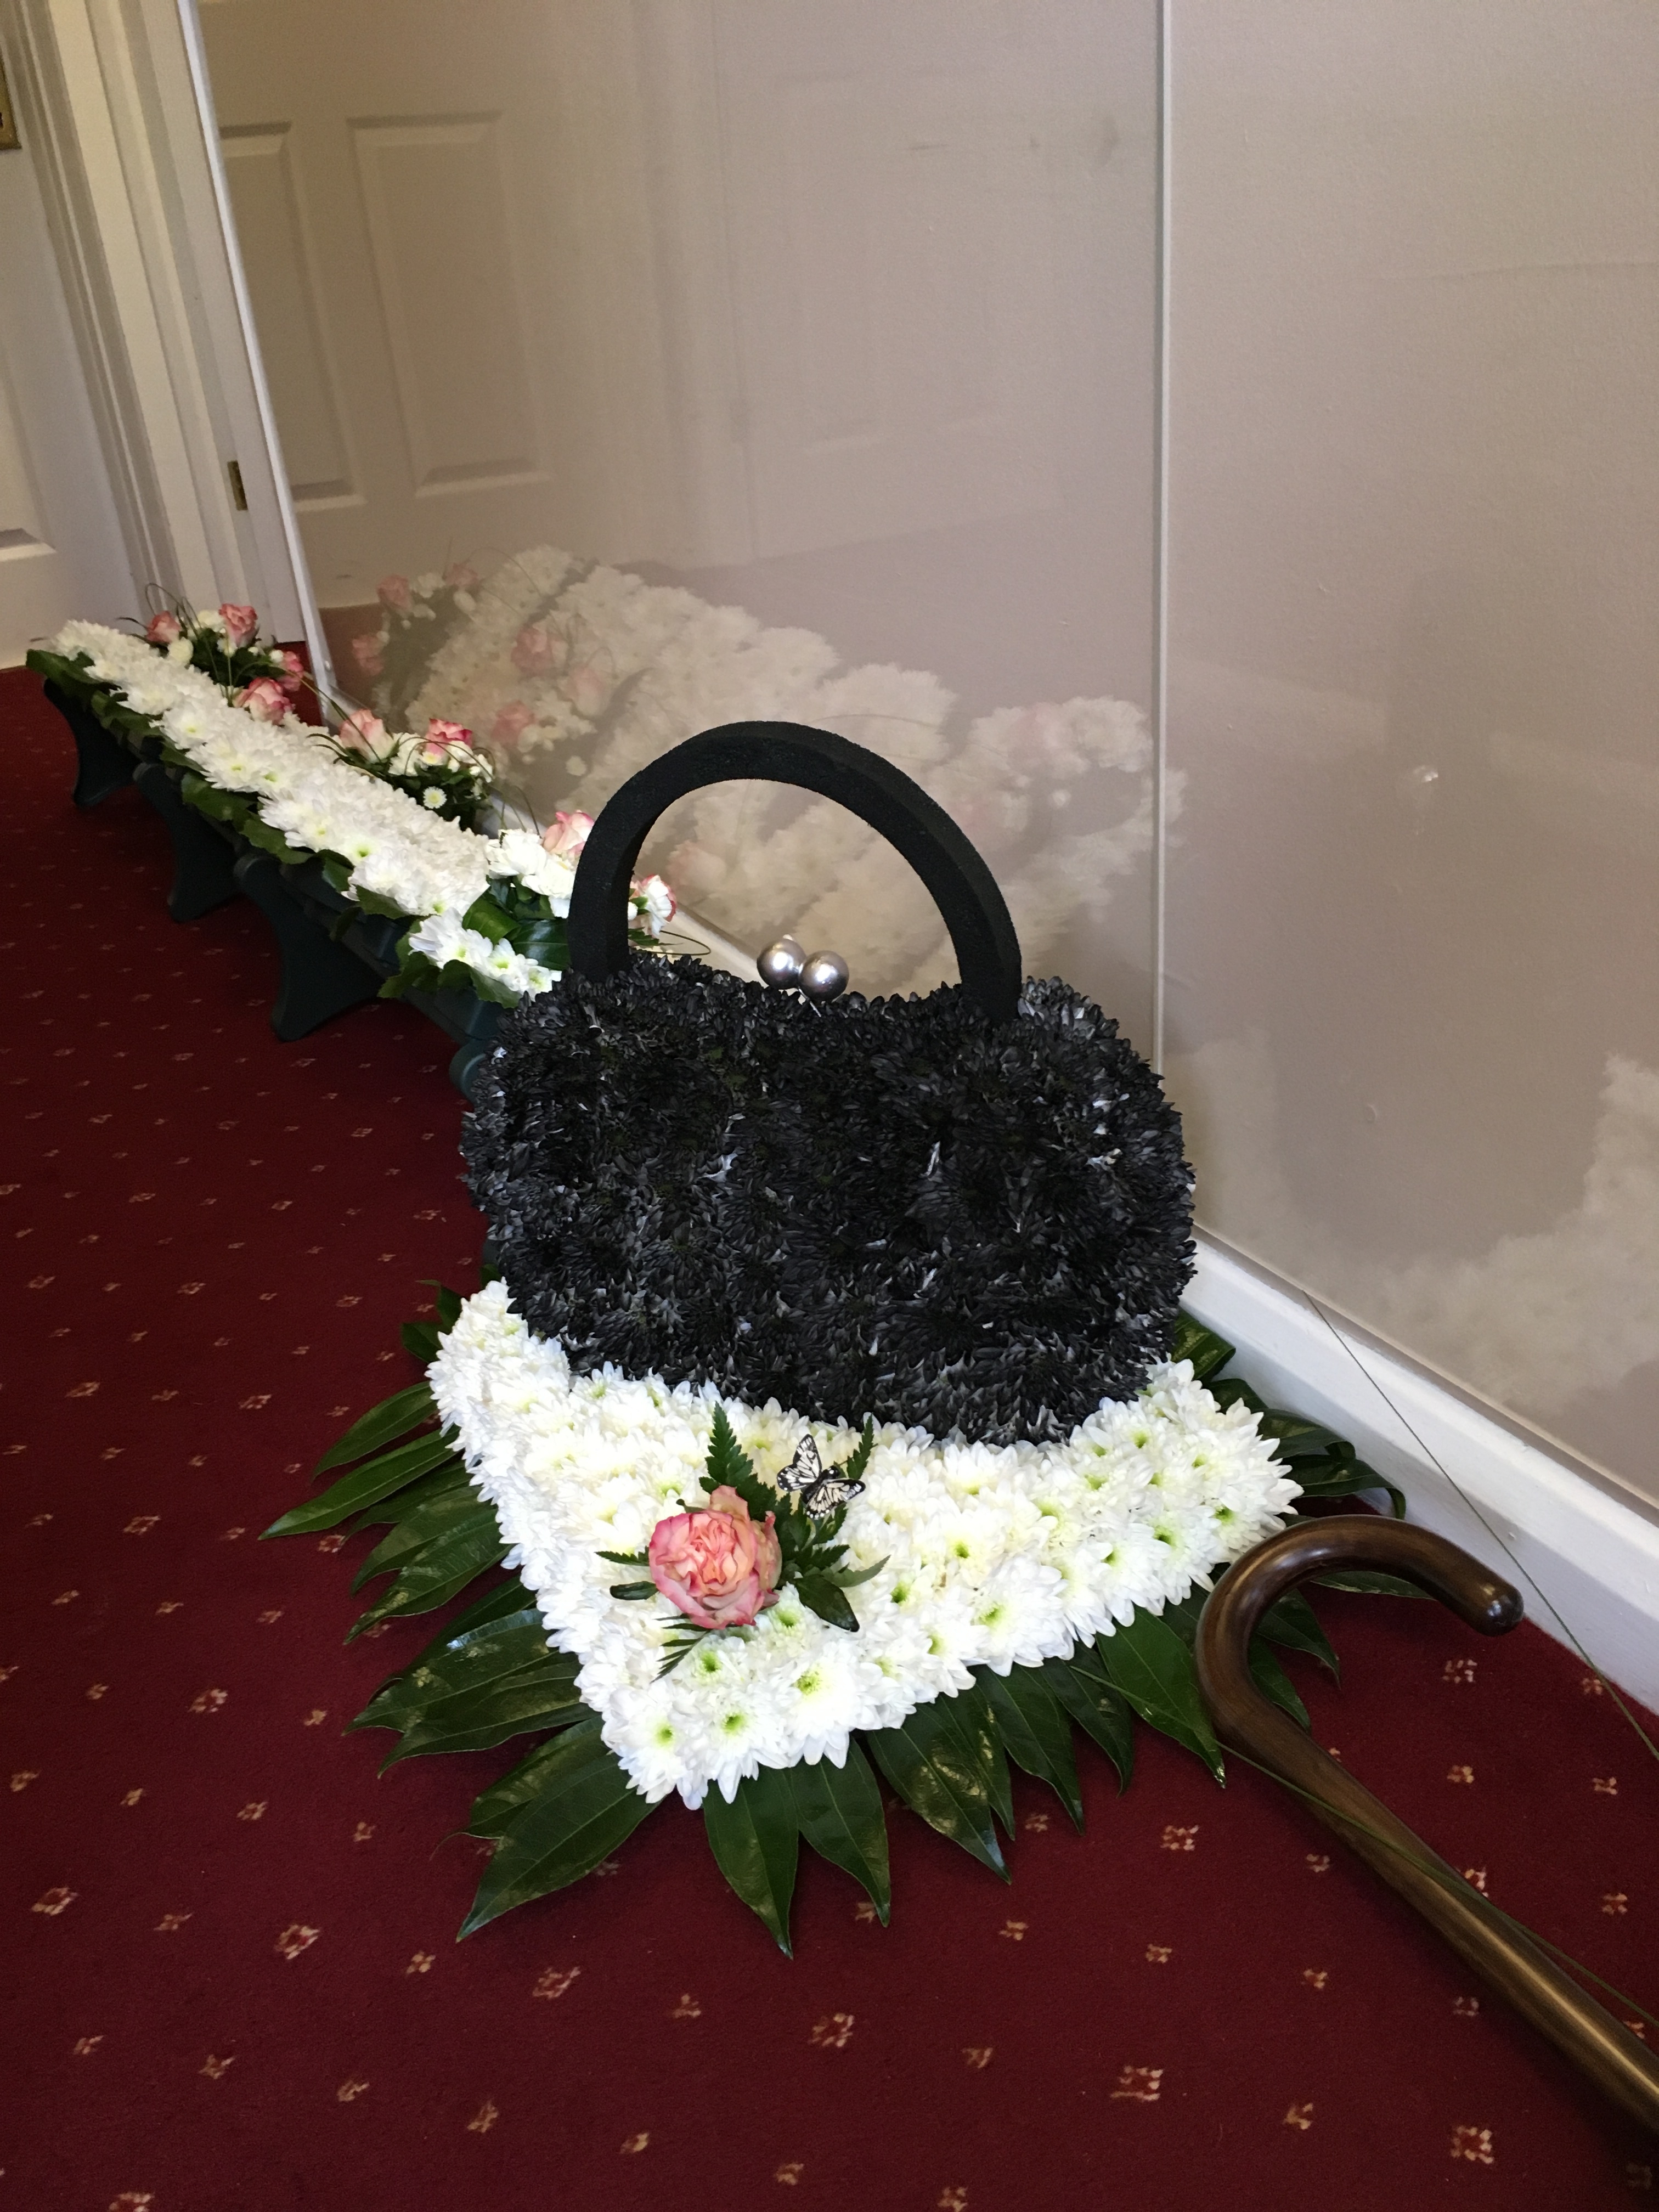 Handbag made from flowers